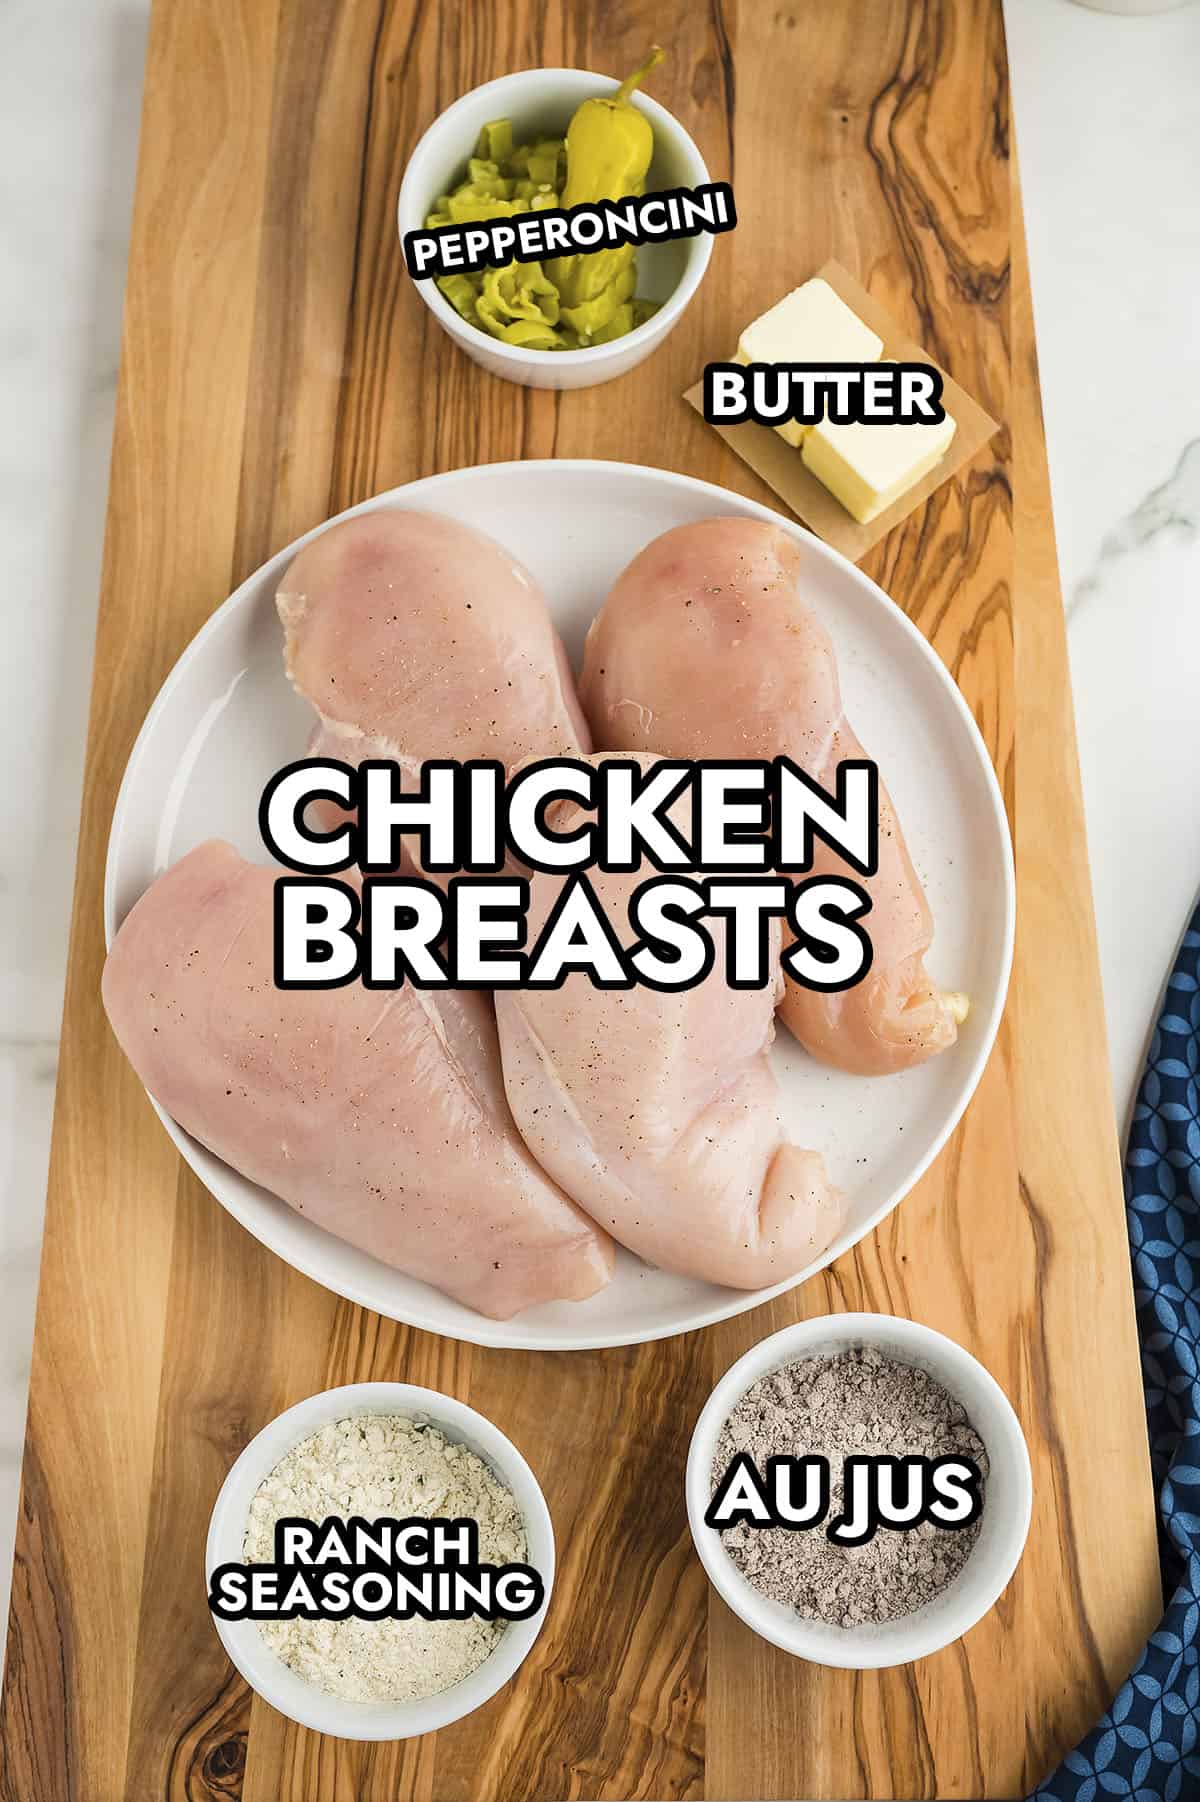 Ingredients for Mississippi chicken recipe.